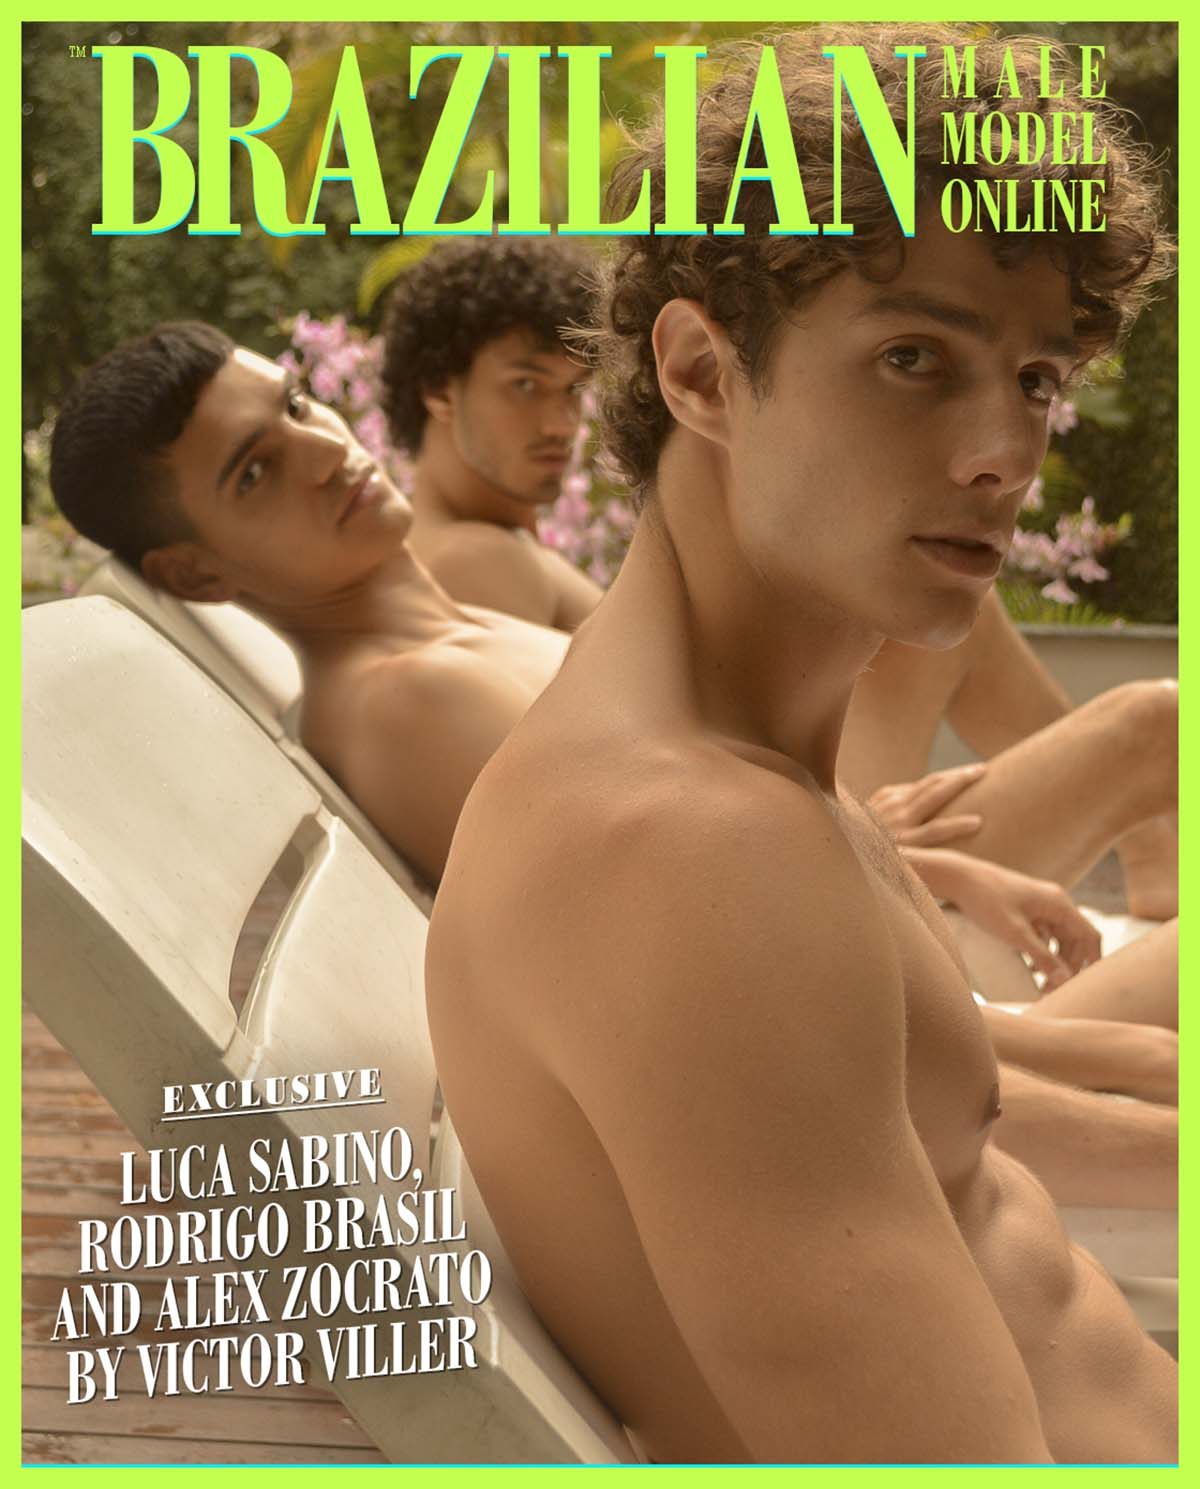 Luca Sabino, Rodrigo Brasil and Alex Zocrato by Victor Viller